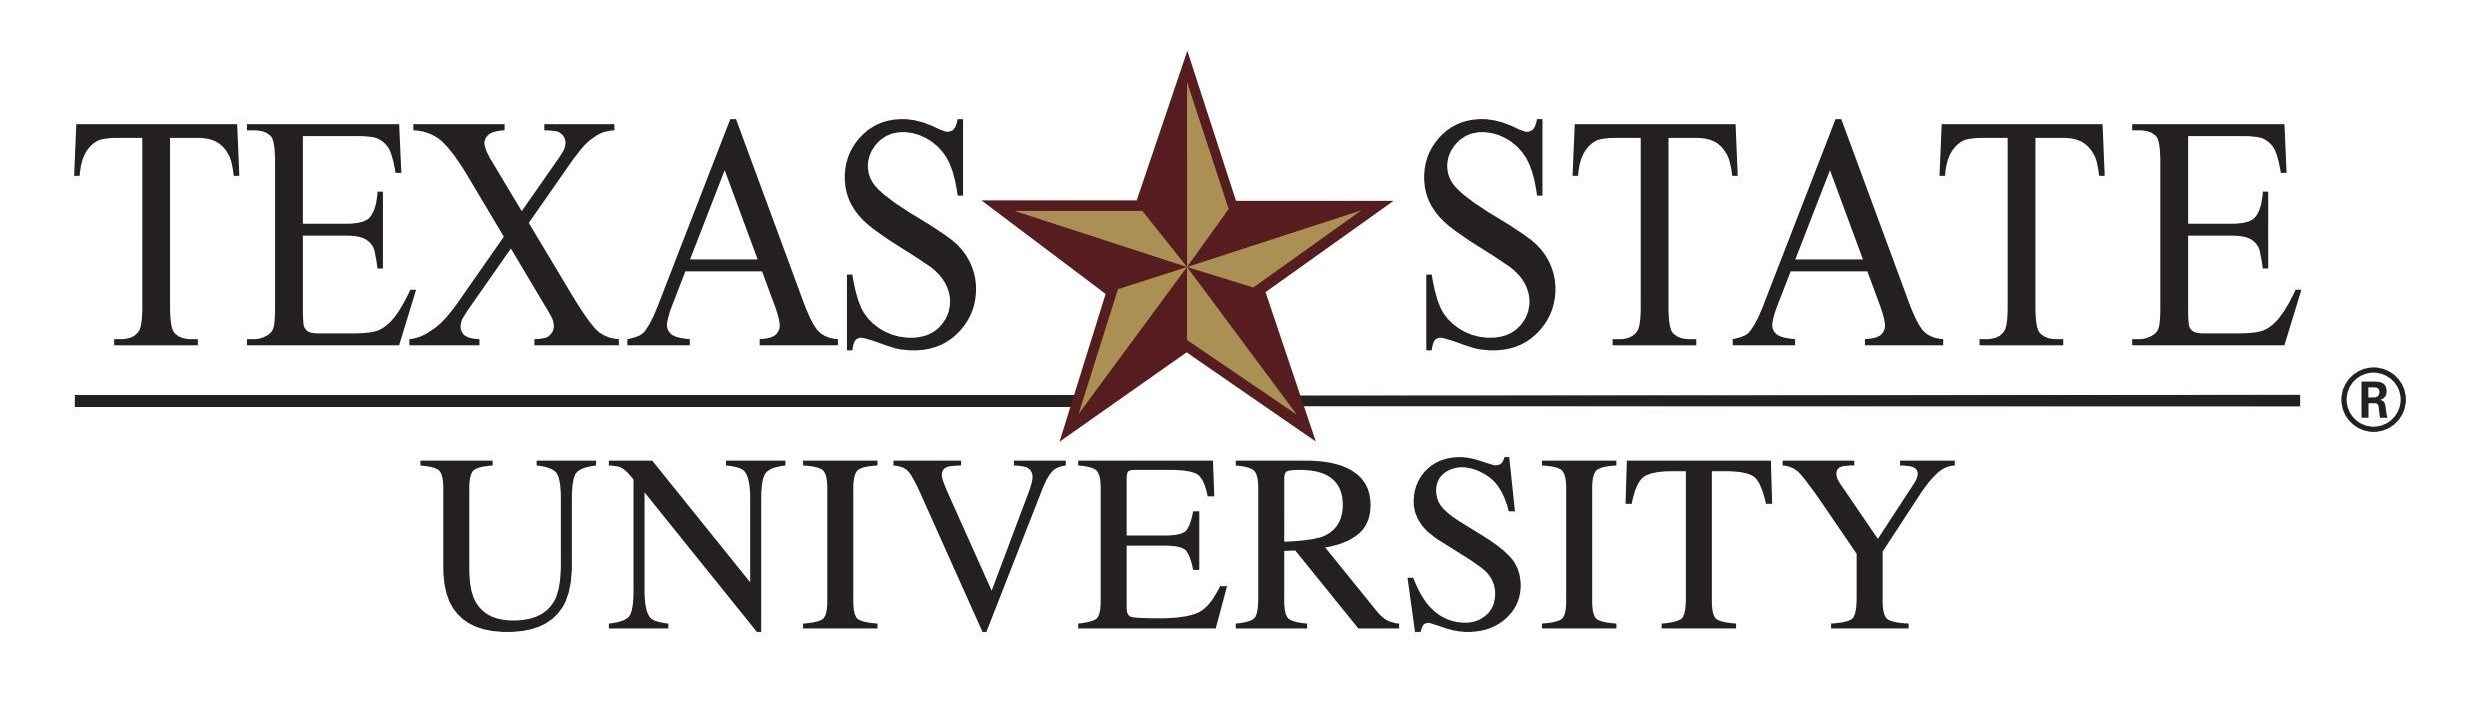 TSU - Texas State University Arm&Emblem